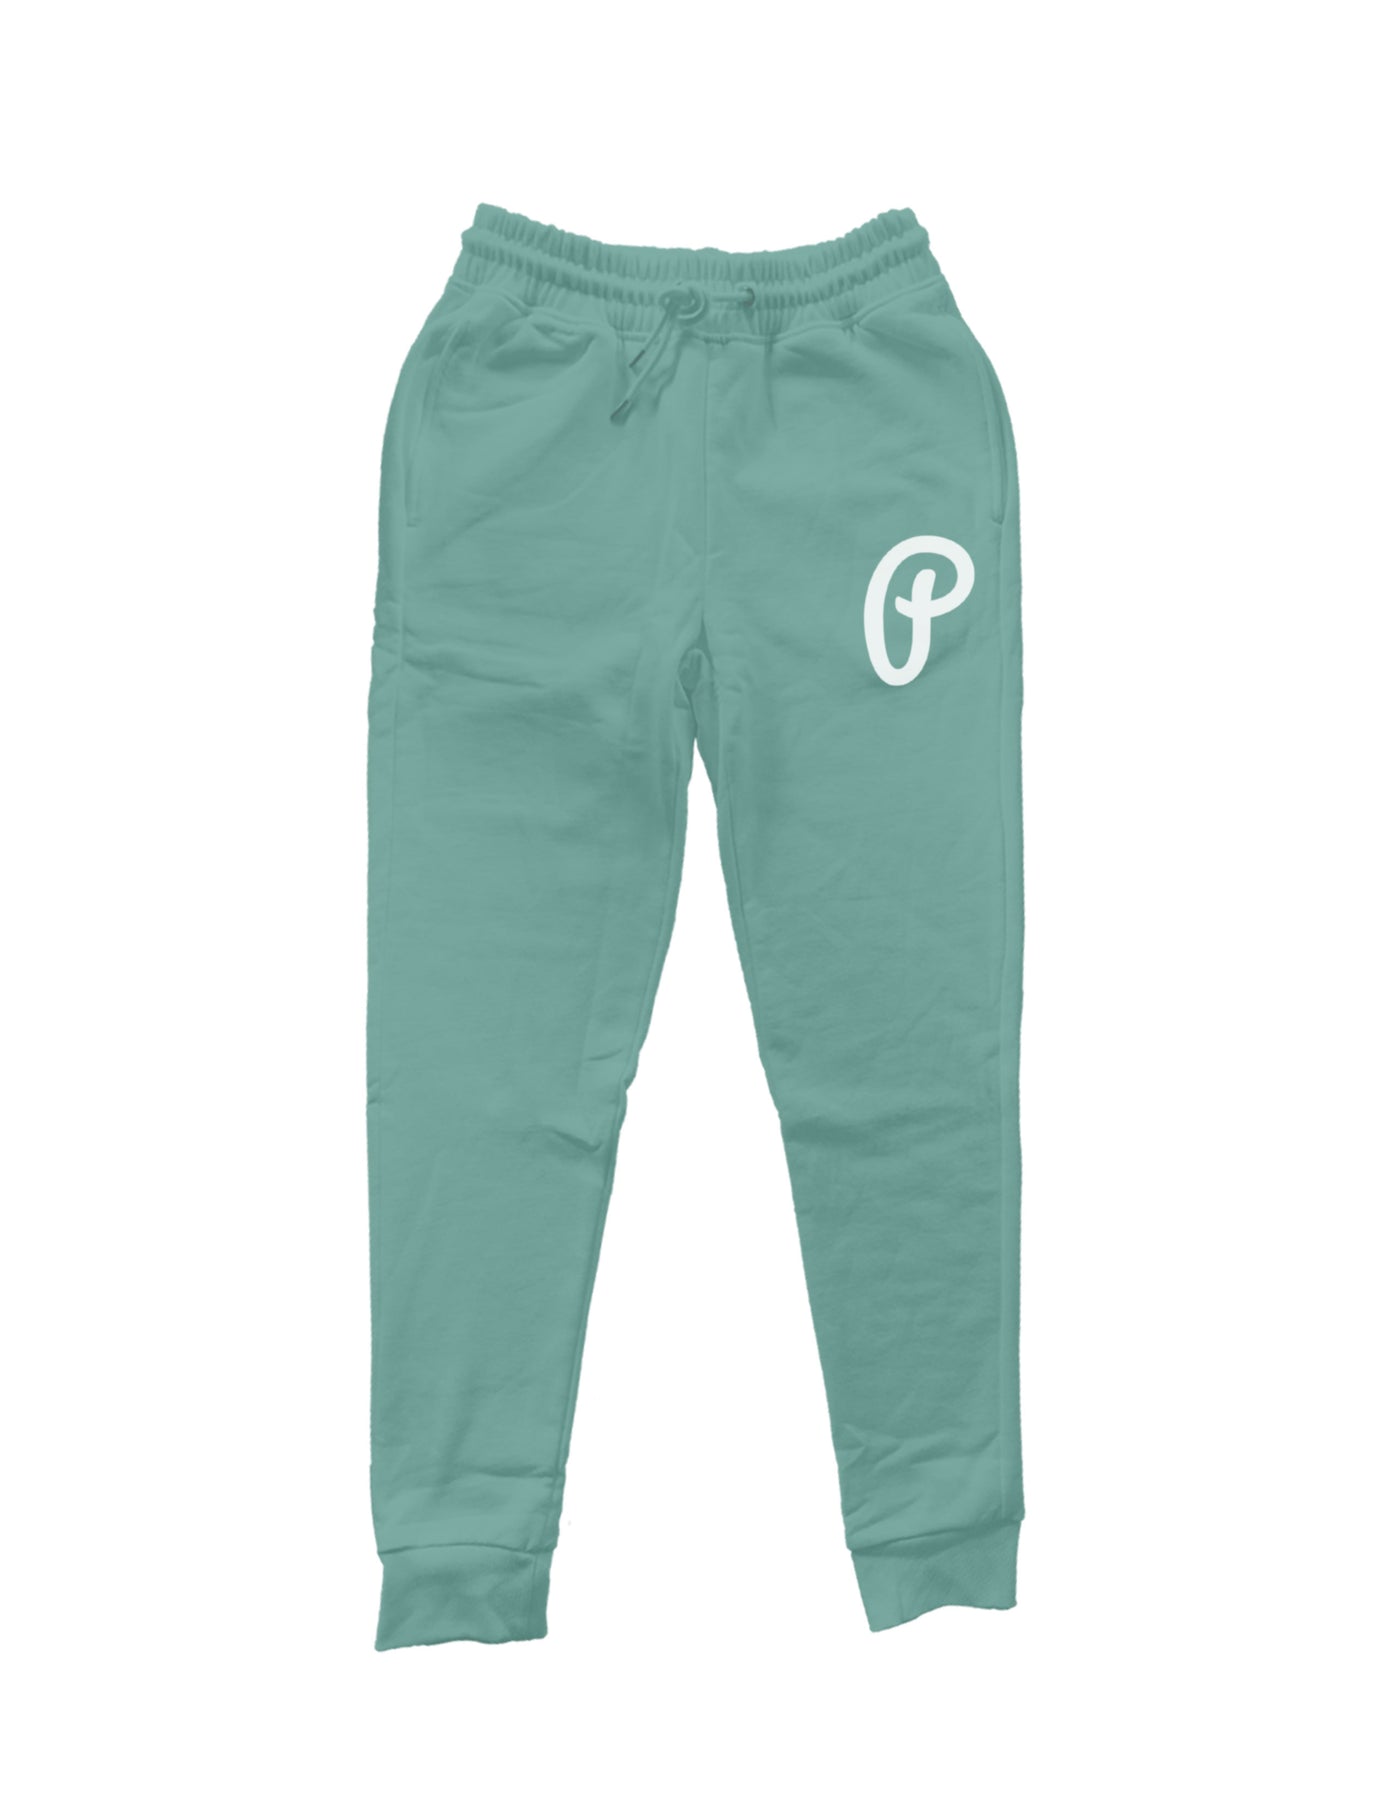 Unisex P Logo Lightweight Joggers - Mint – Produce Section Clothing